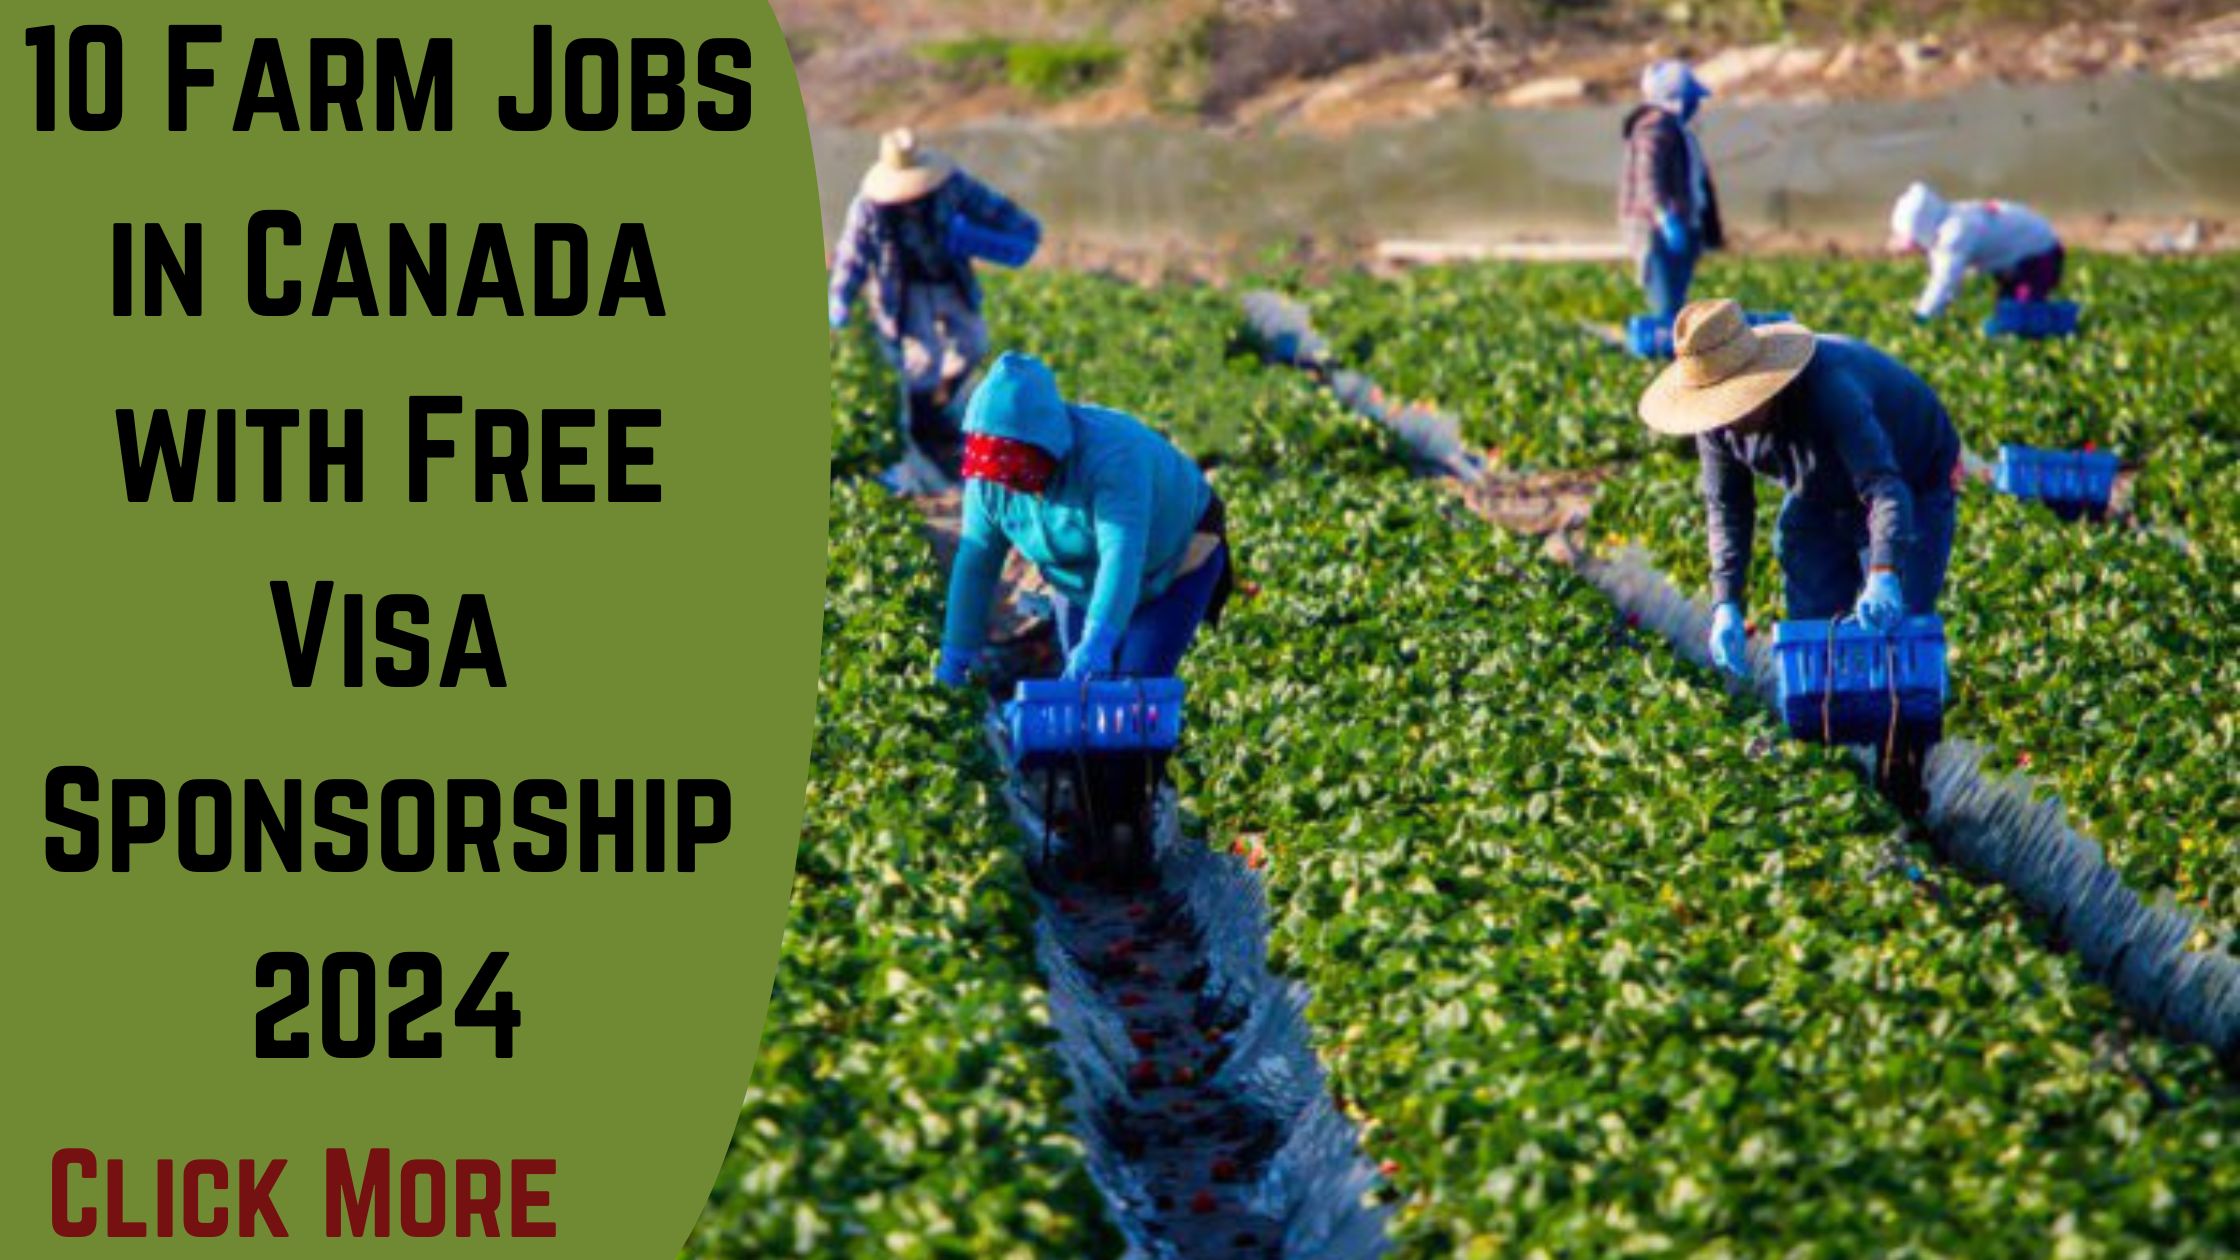 Farm Jobs in Canada with Free Visa Sponsorship 